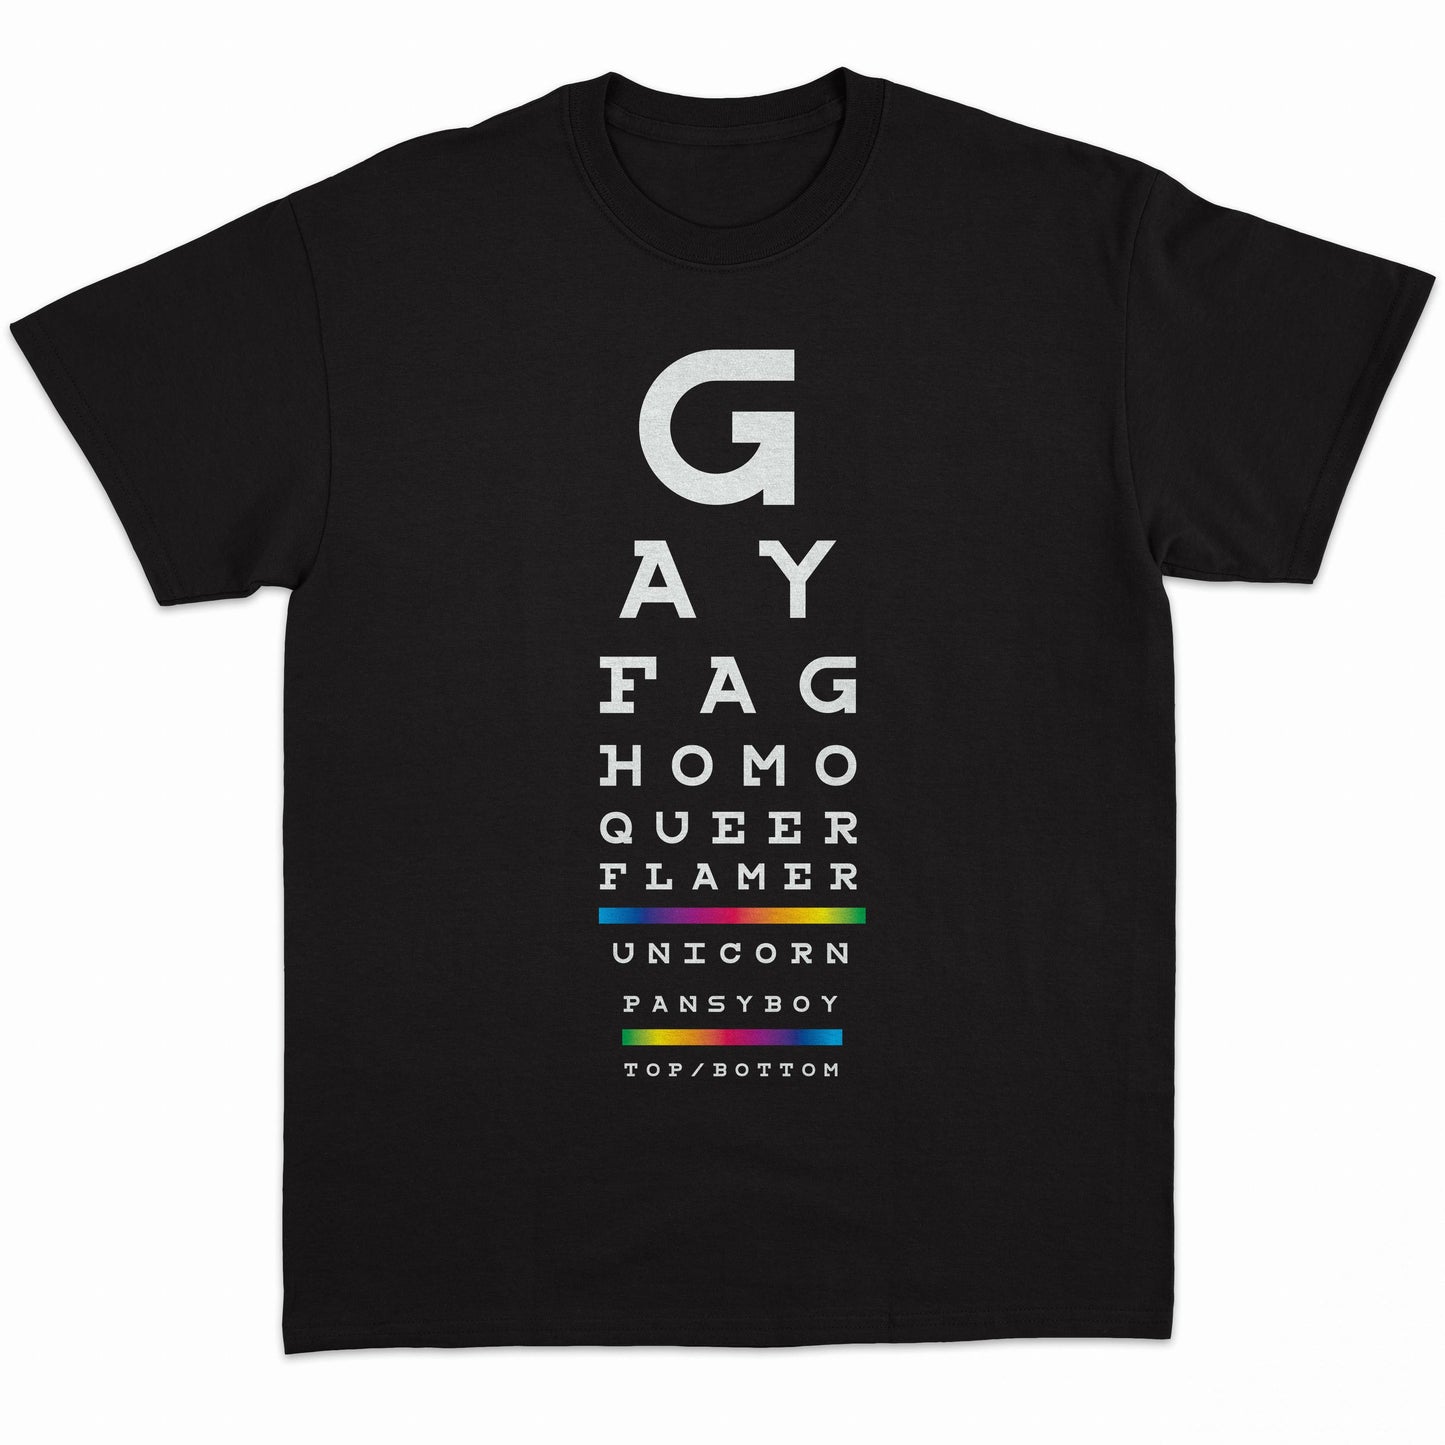 Tom of Finland - Gay Eye Chart T-Shirt (Queer LGBTQ)